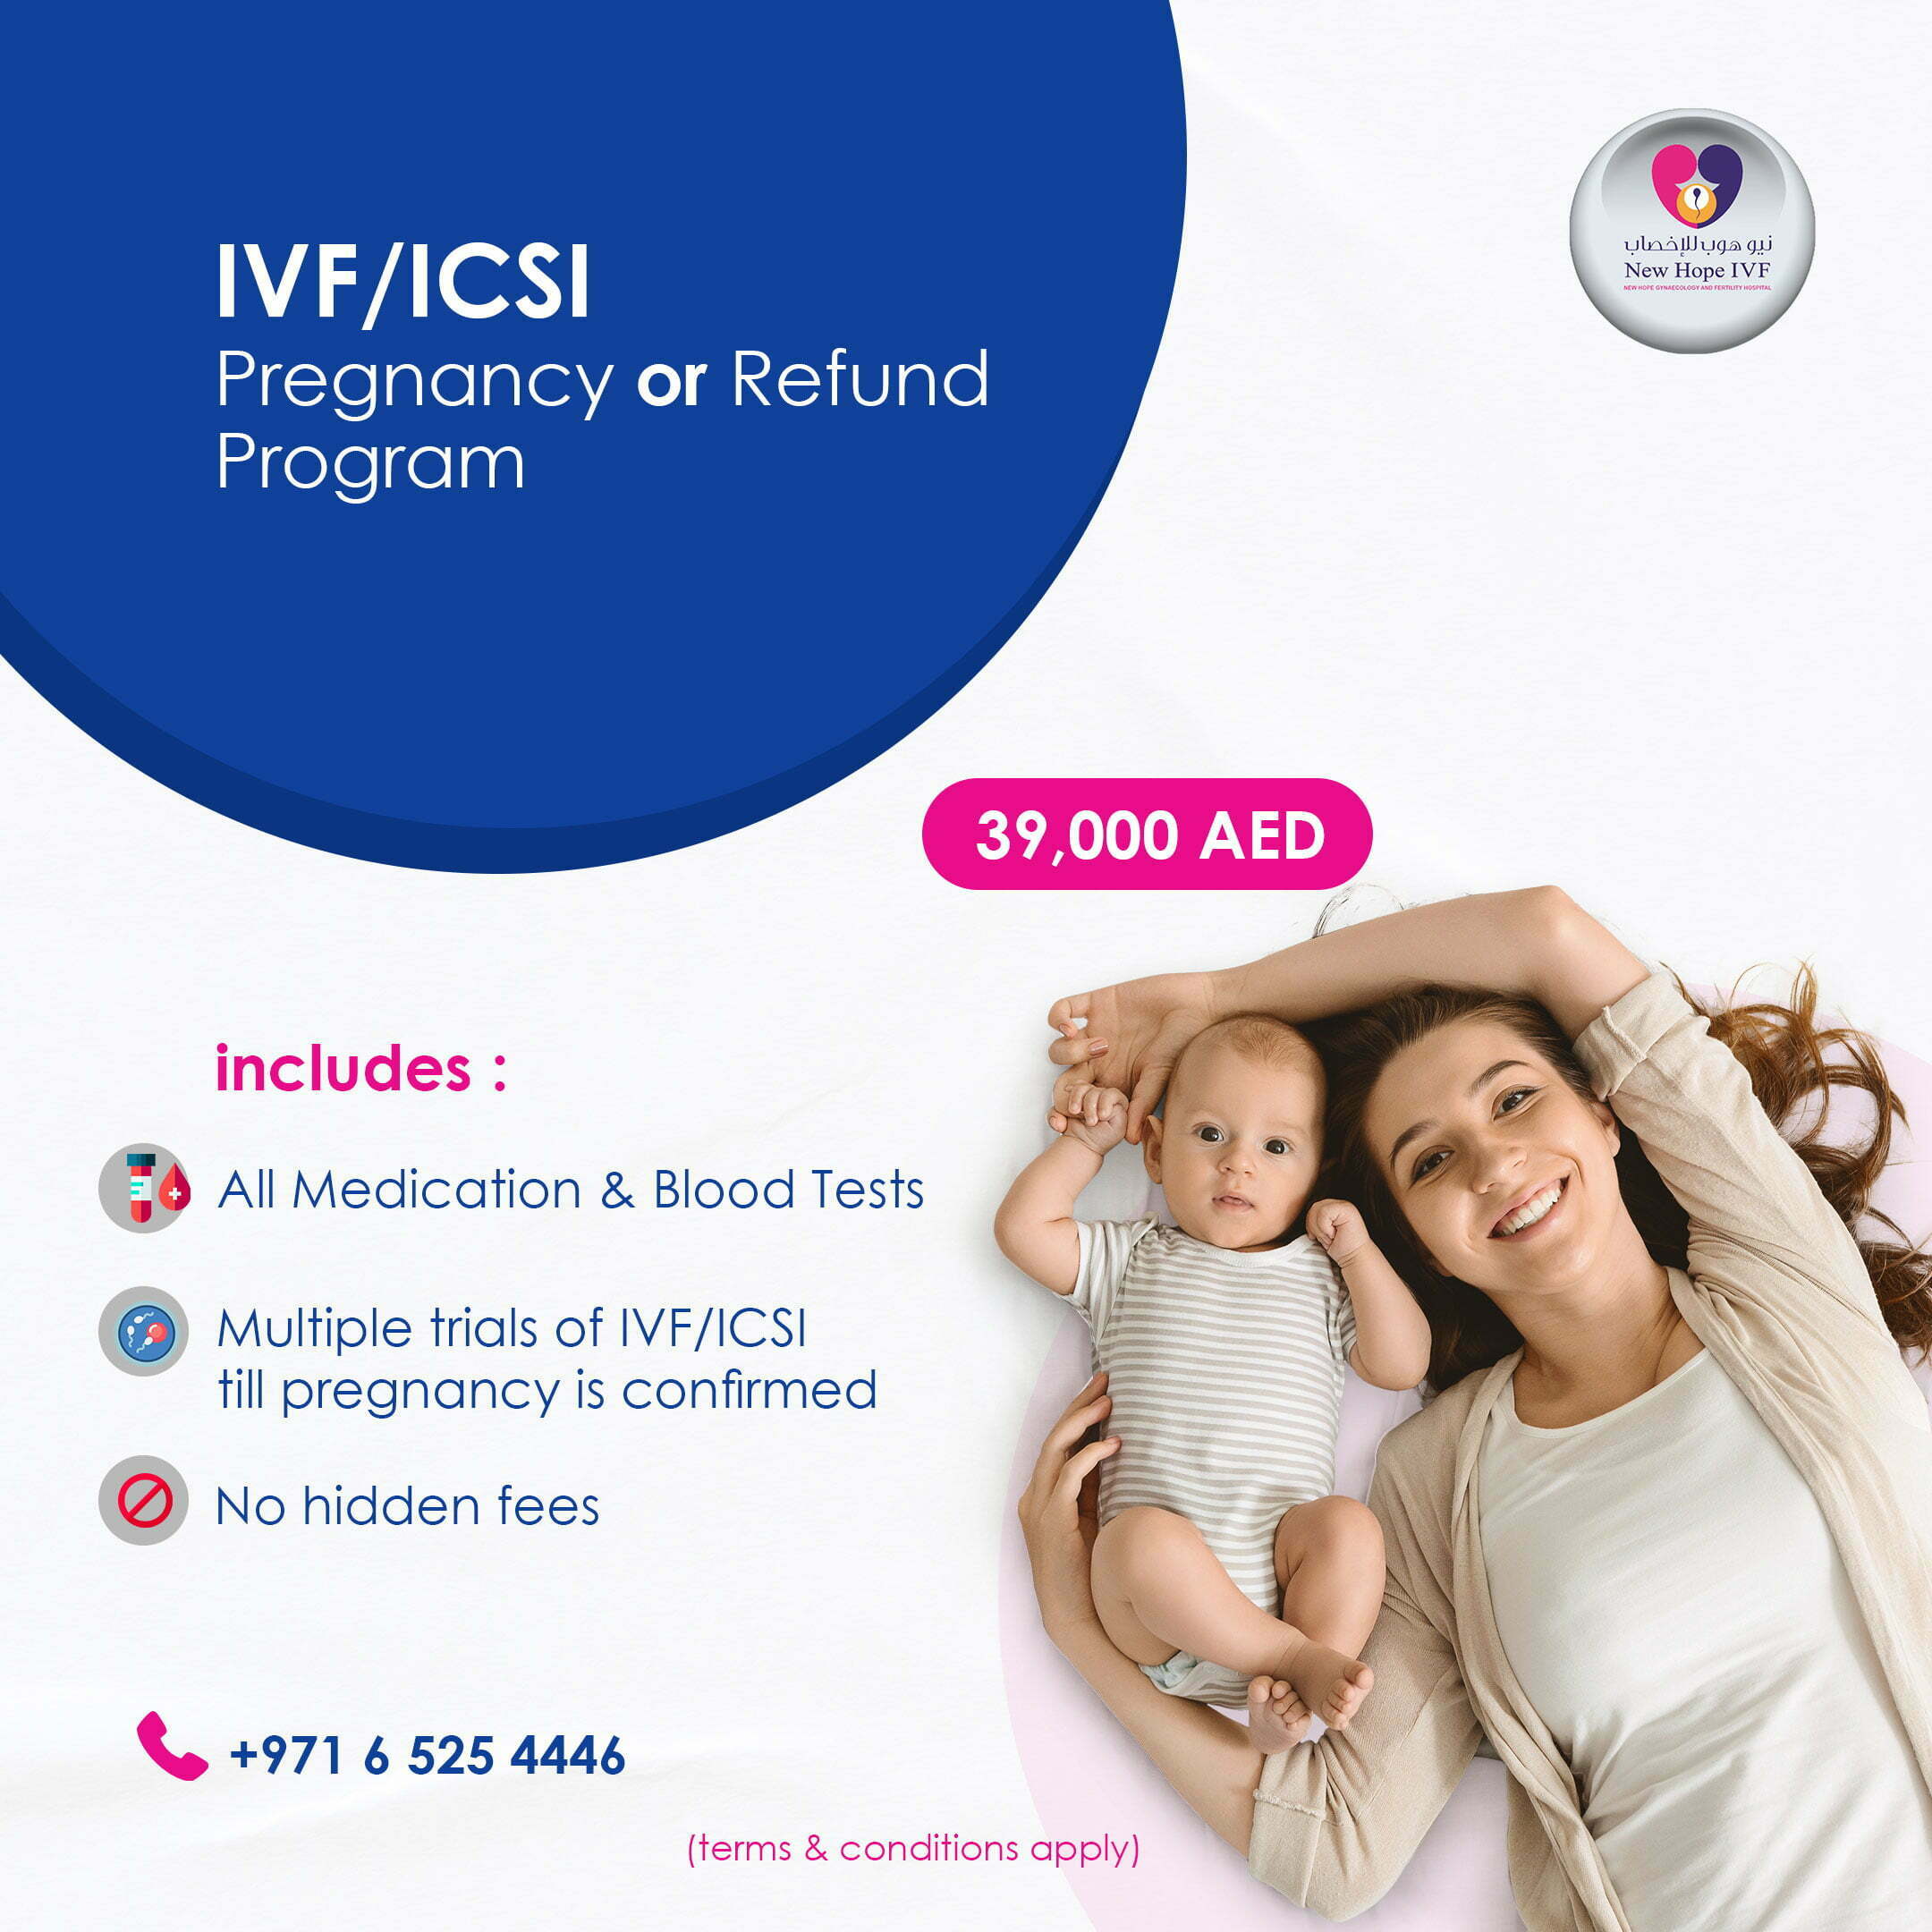 The IVF/ICSI Pregnancy or Refund Program